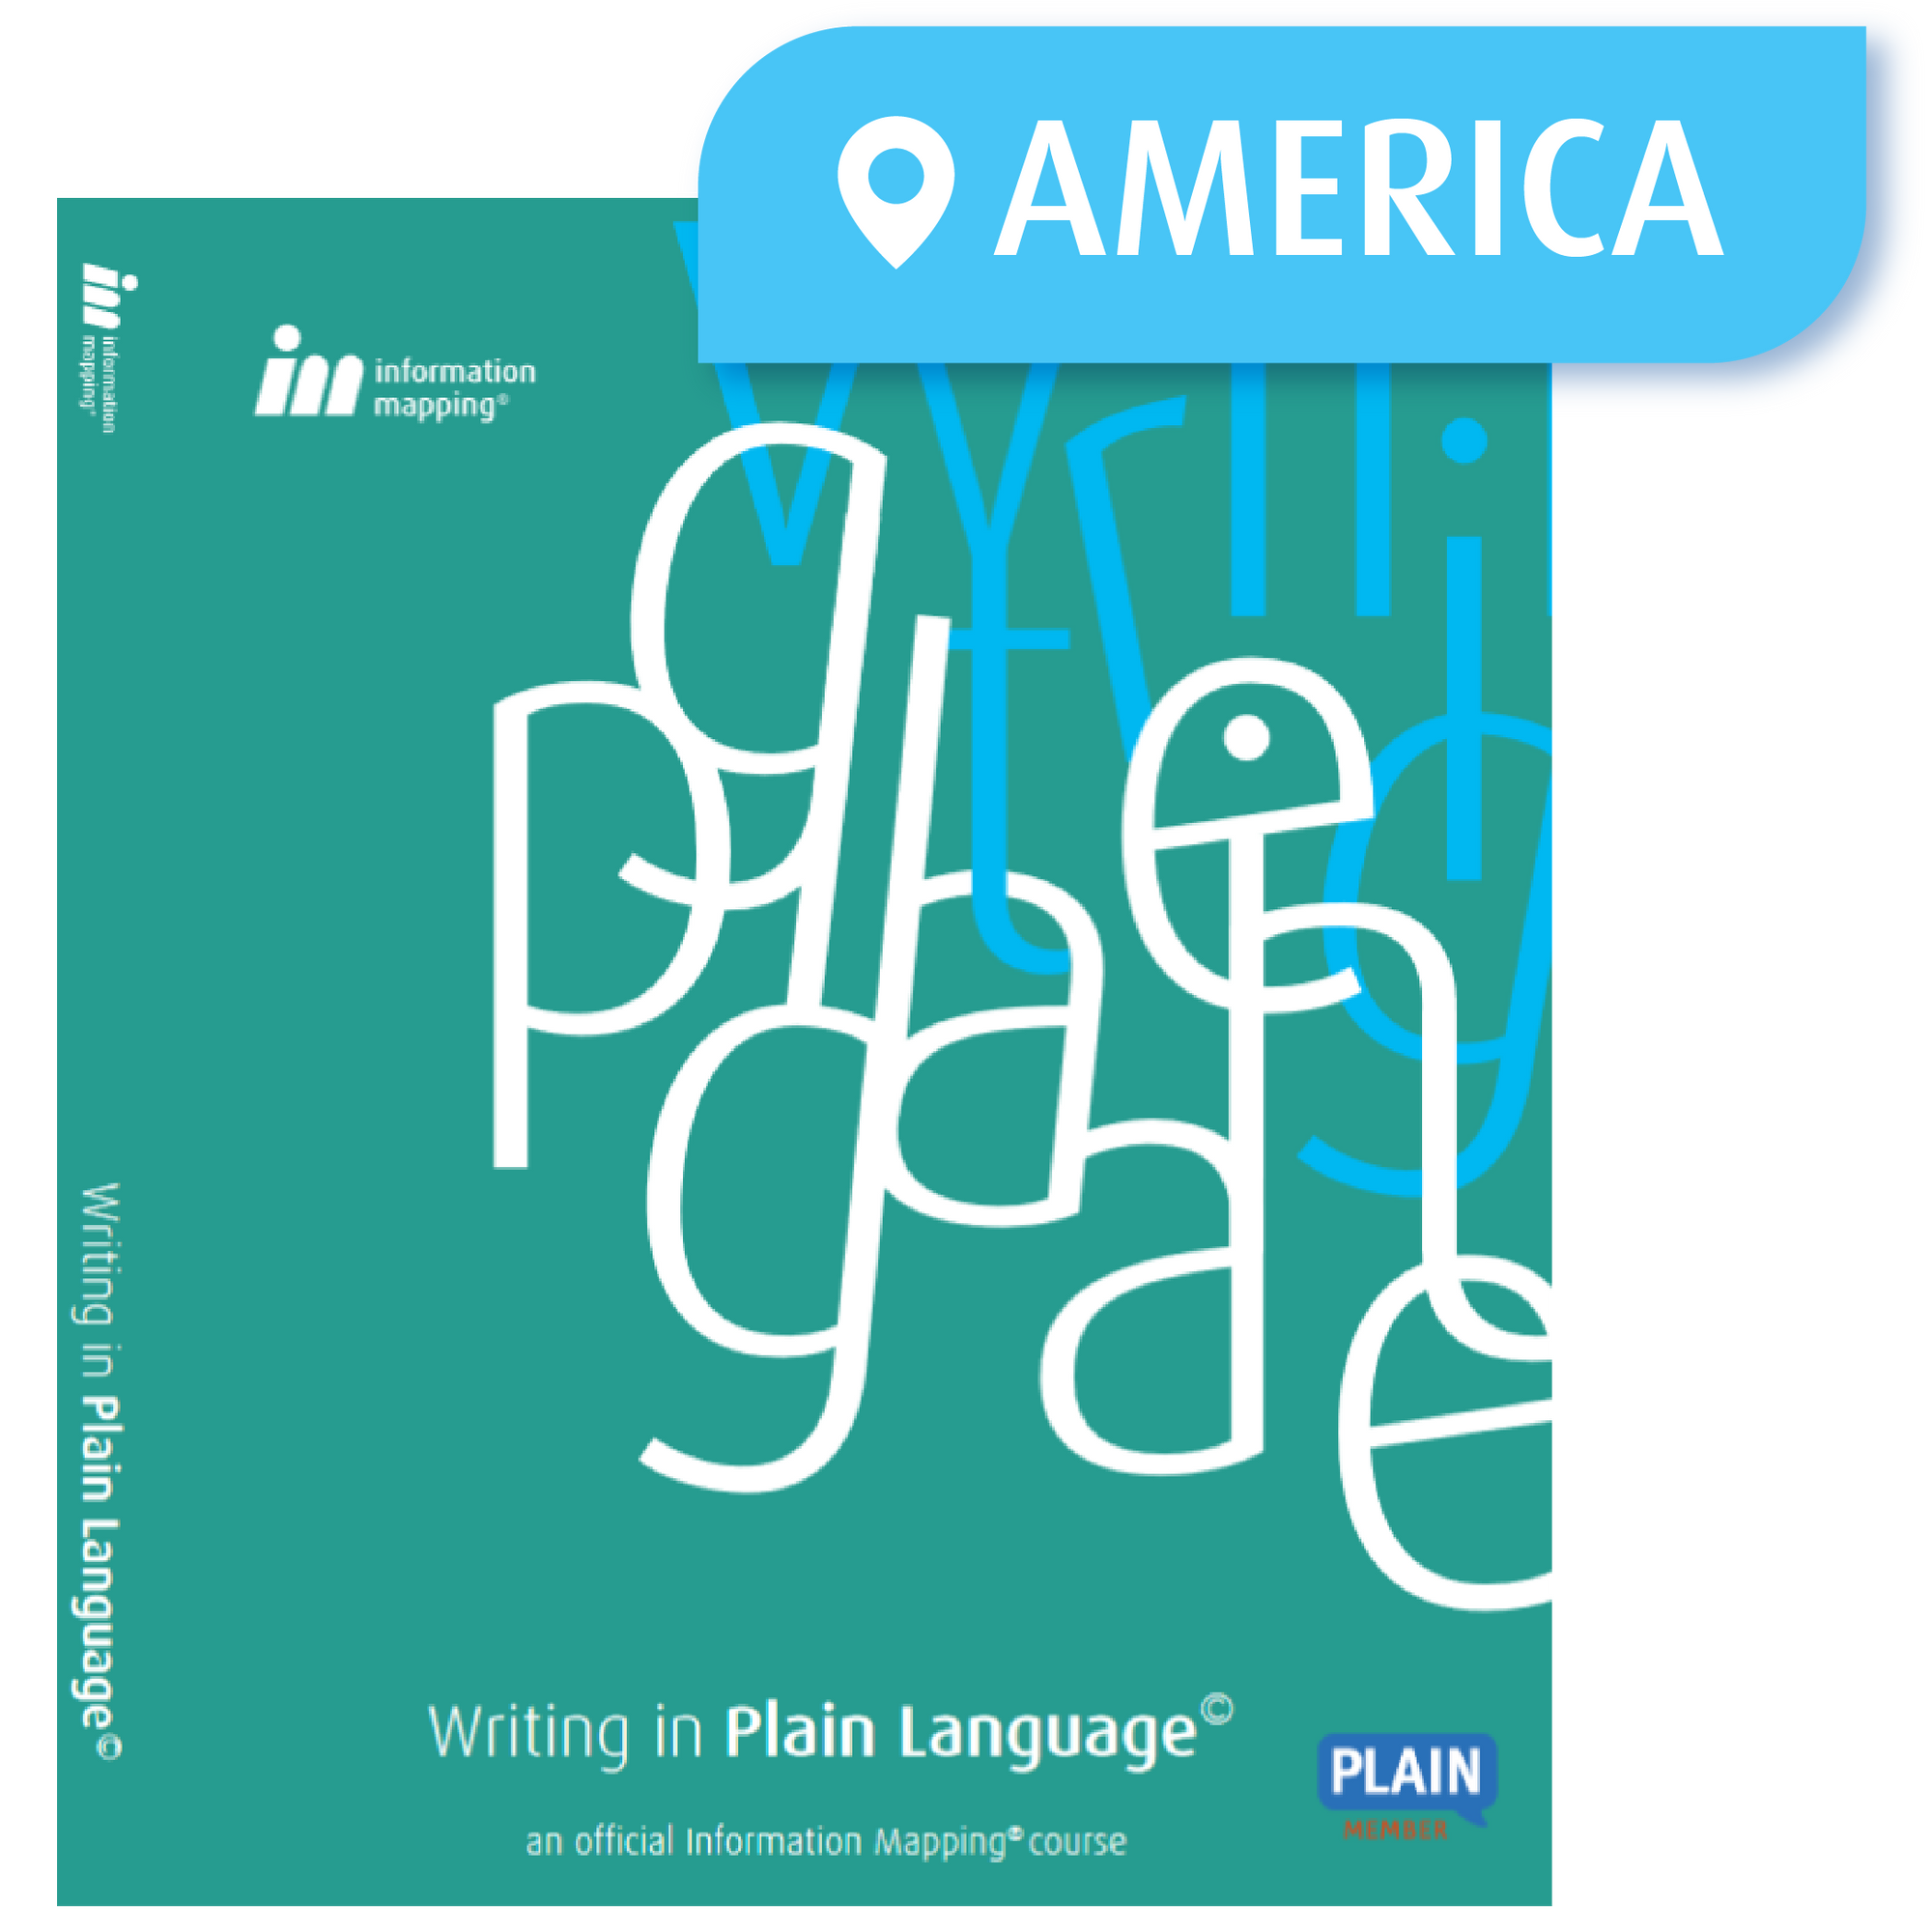 April 17-20, 2023 - Virtual Public Course: Writing in Plain Language